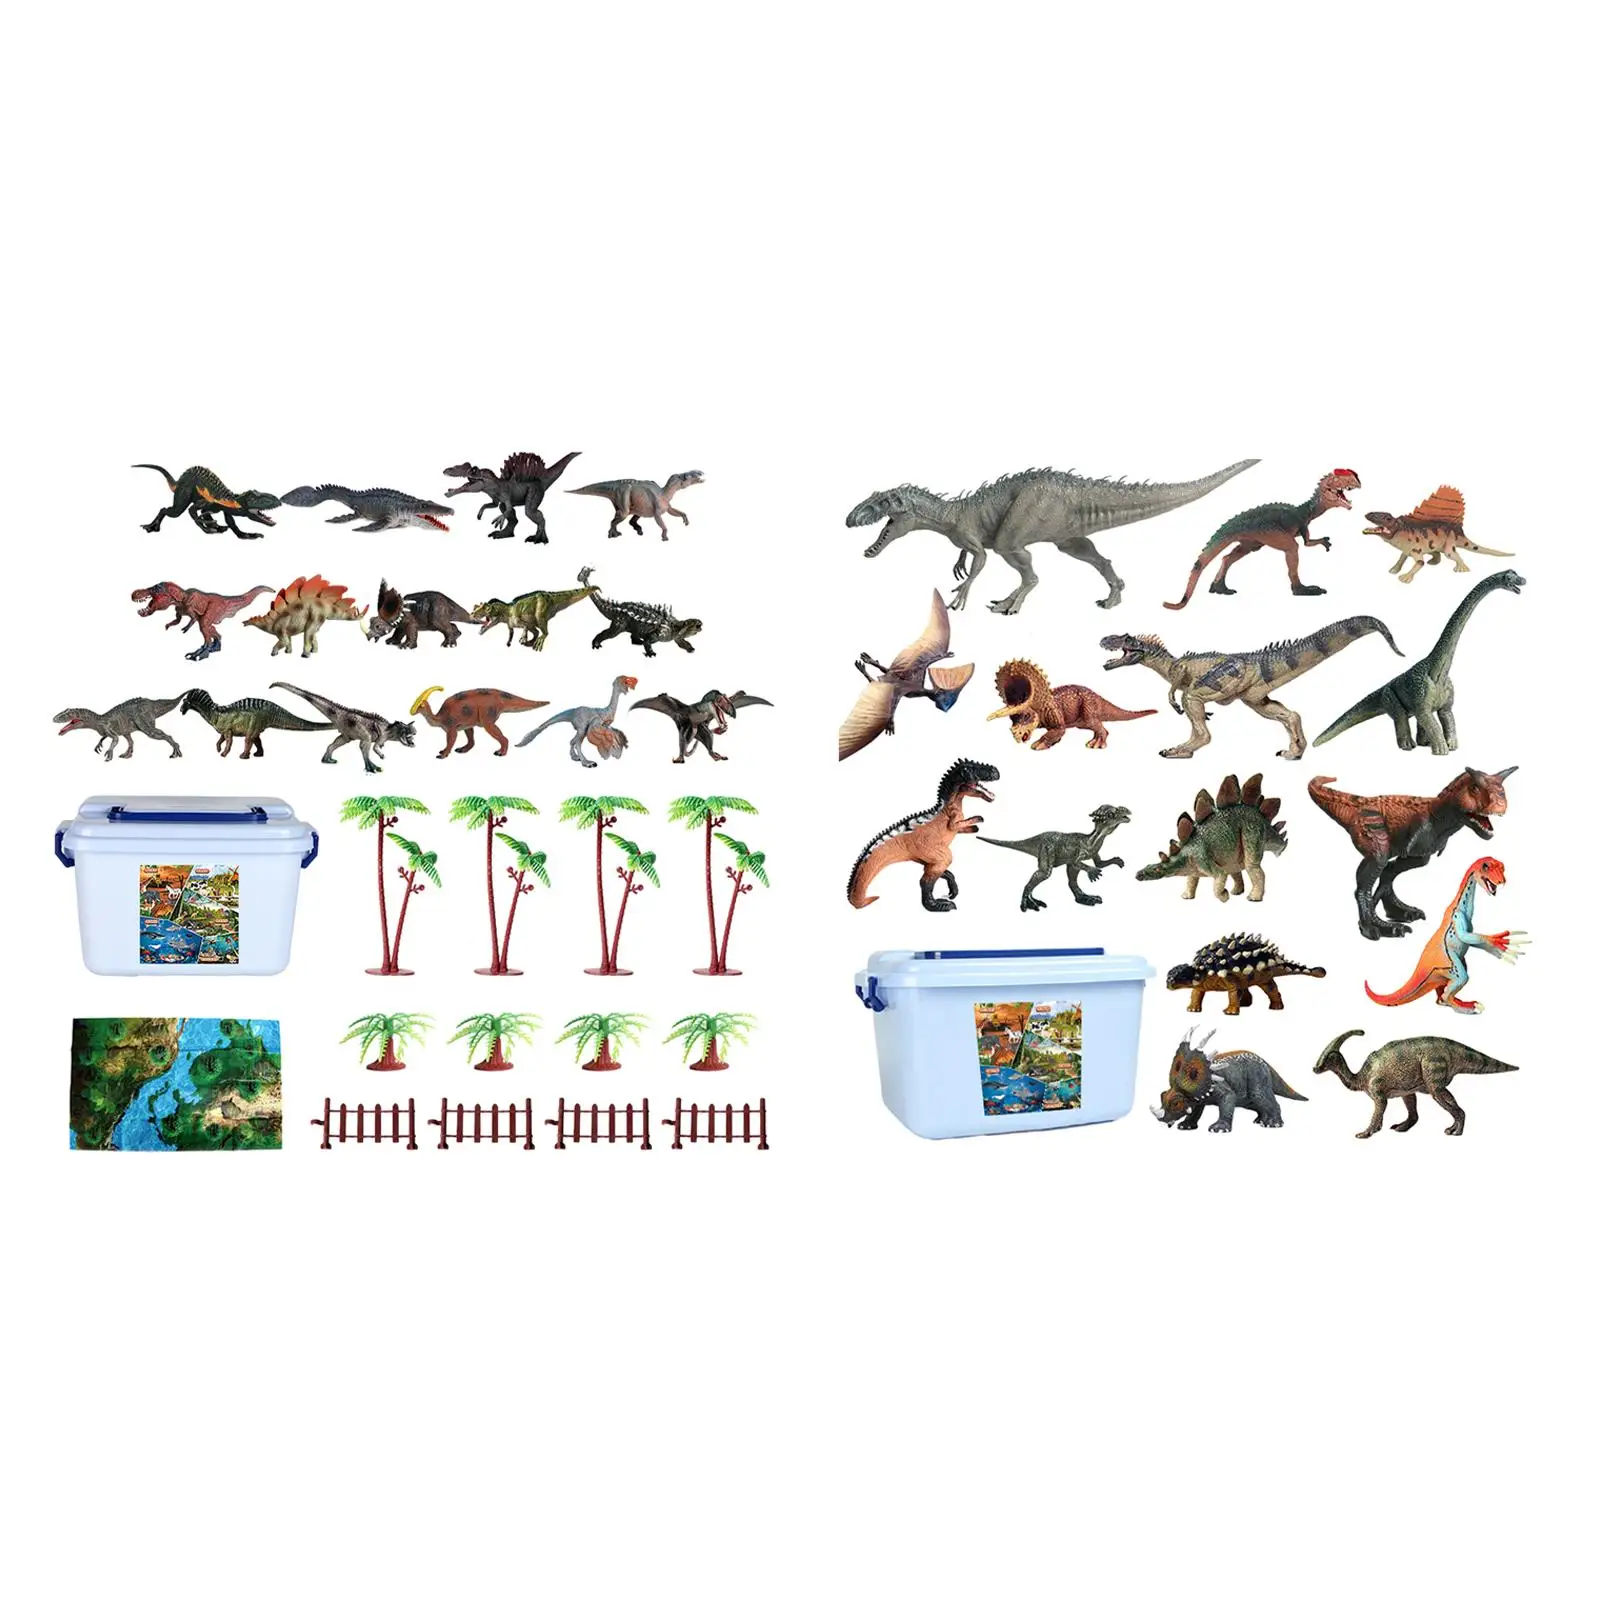 15 Pieces Kids Dinosaur Toys Wildlife Animal Figurine for Christmas New Year